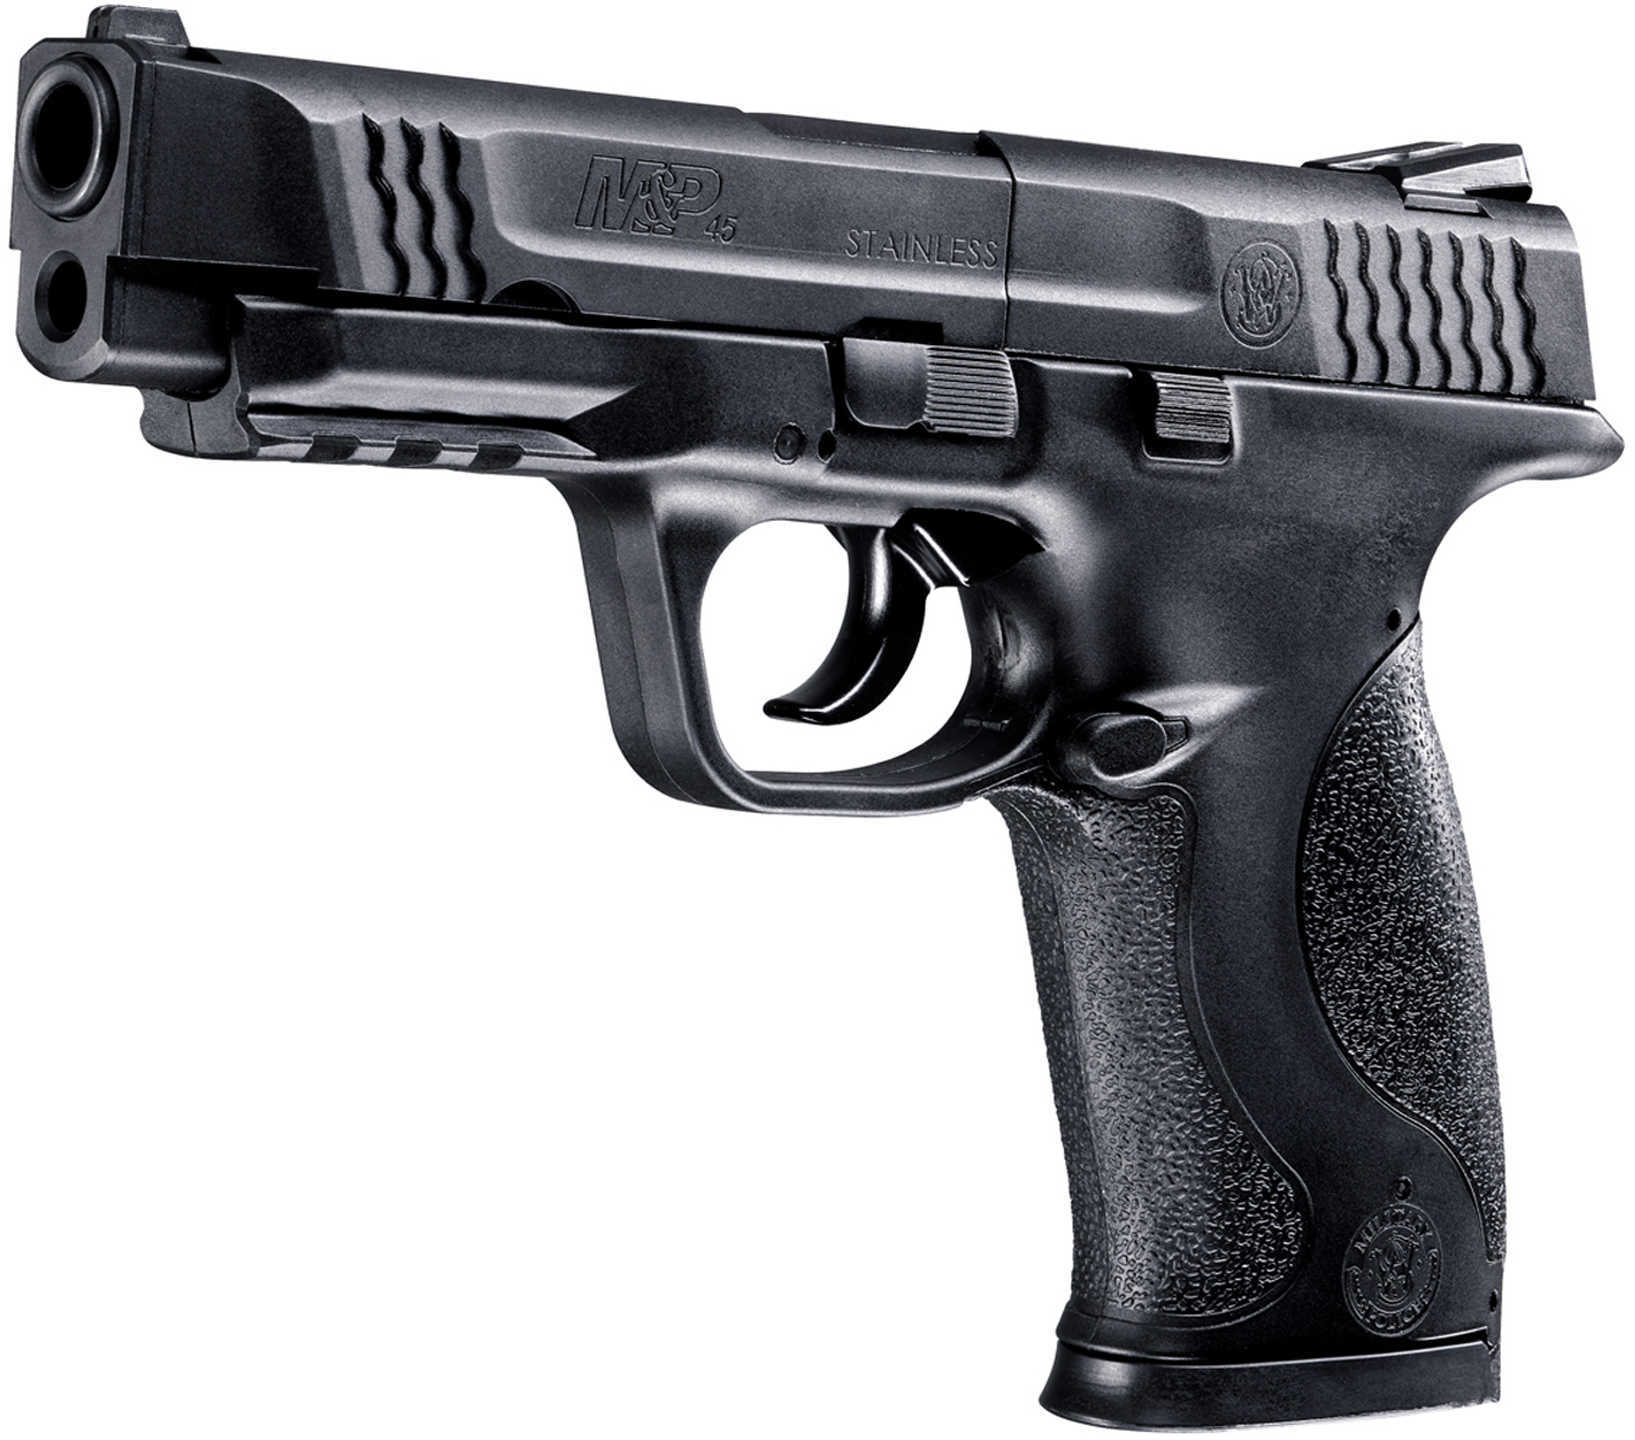 Umarex USA Smith & Wesson M&P 45 Air Pistol .177 Pellet Black 2255060